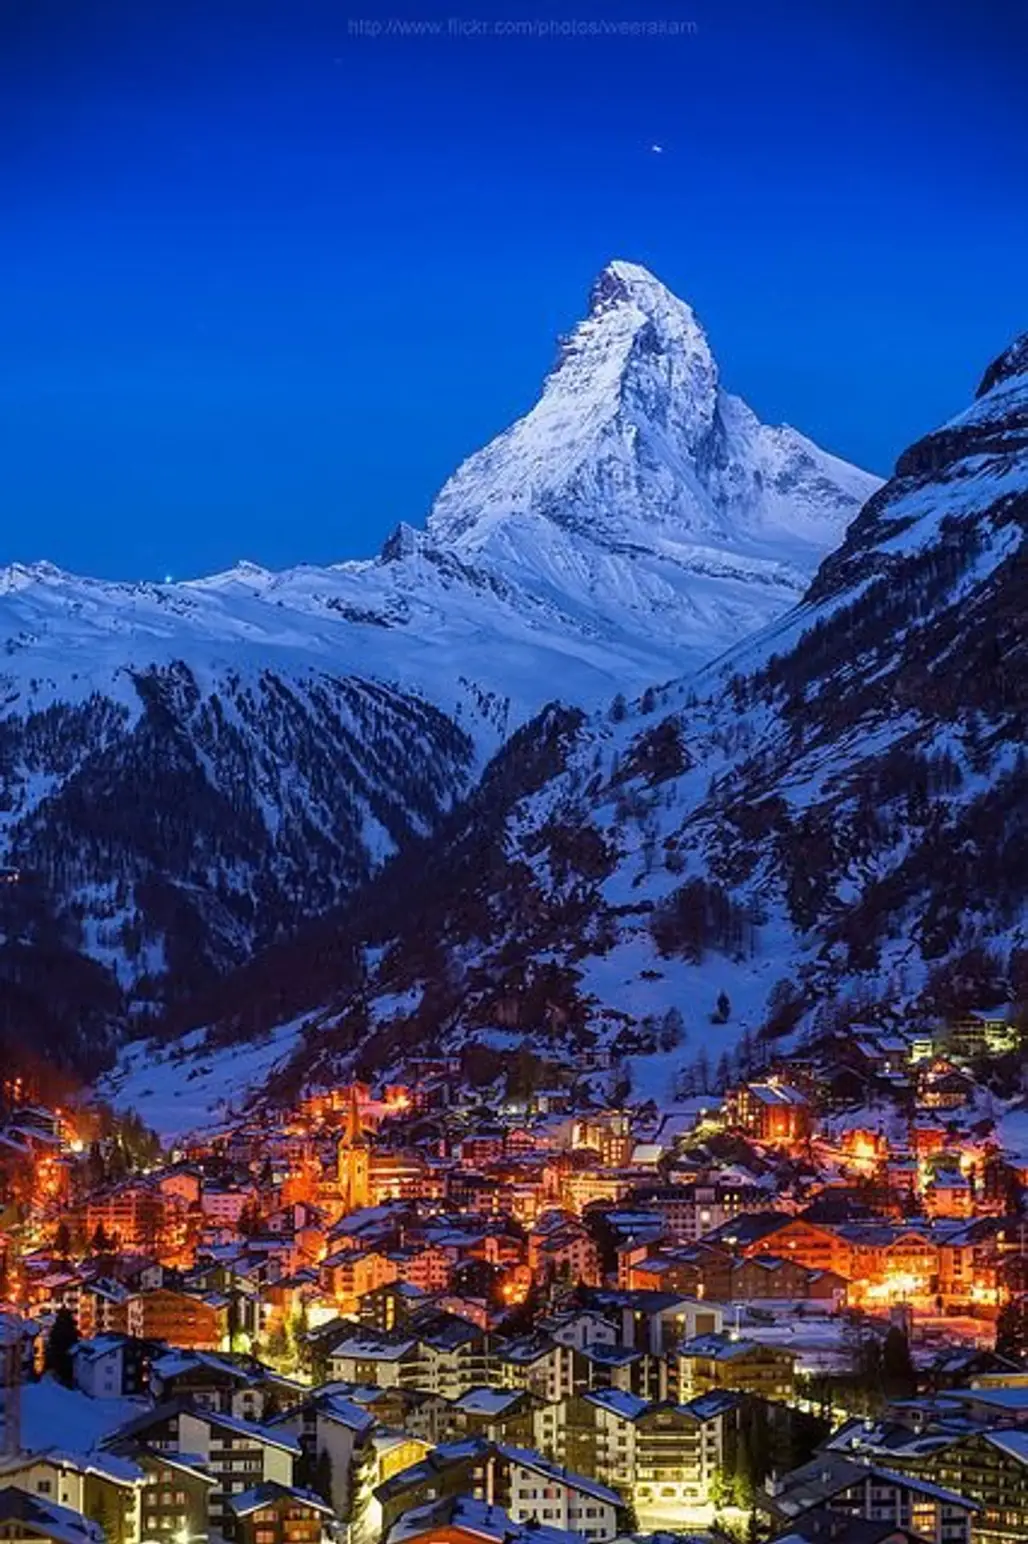 See the Matterhorn in Canton Valais